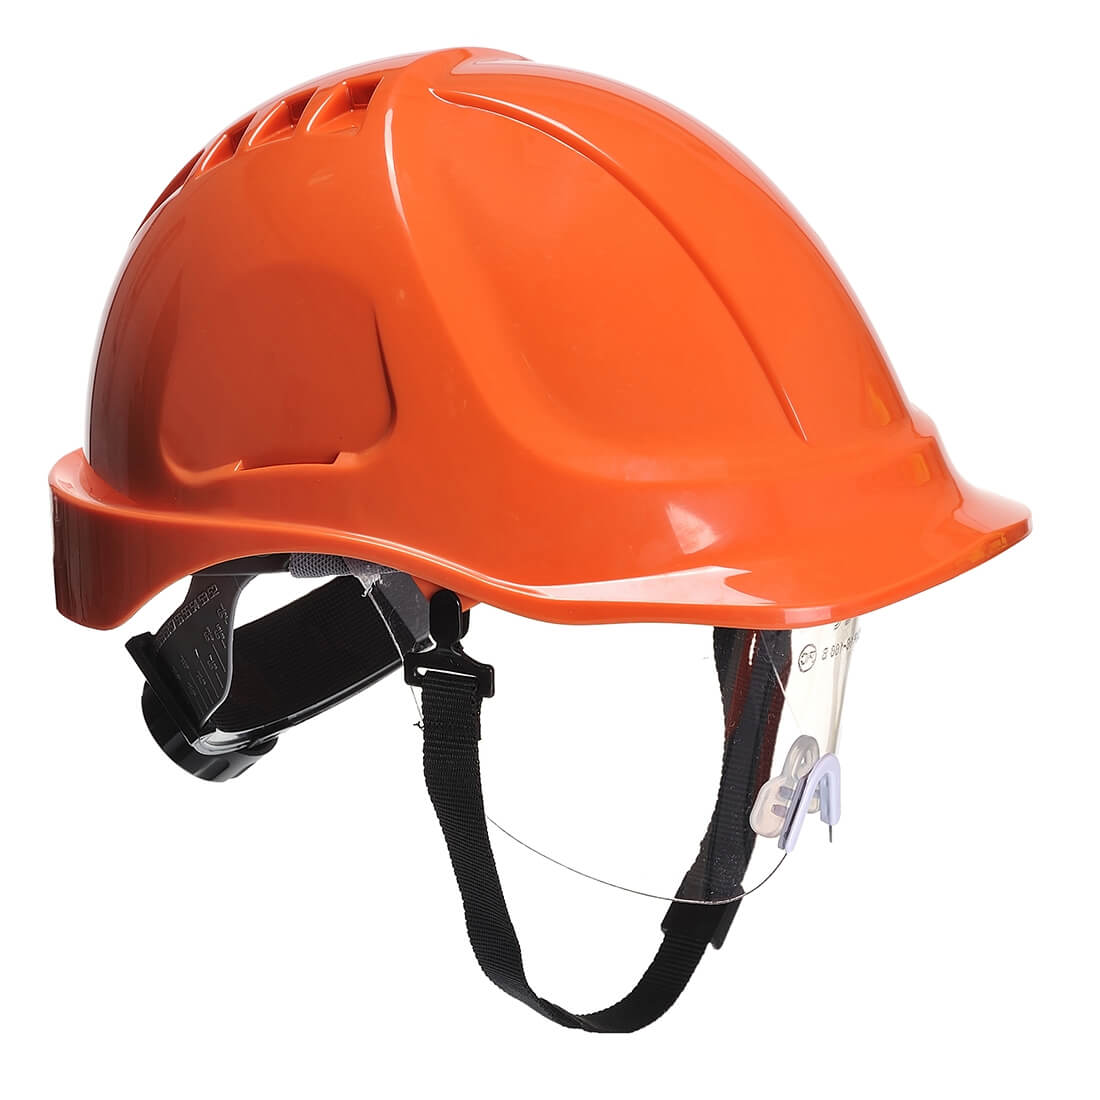 Endurance Plus Helmet (MM) - Personal protection